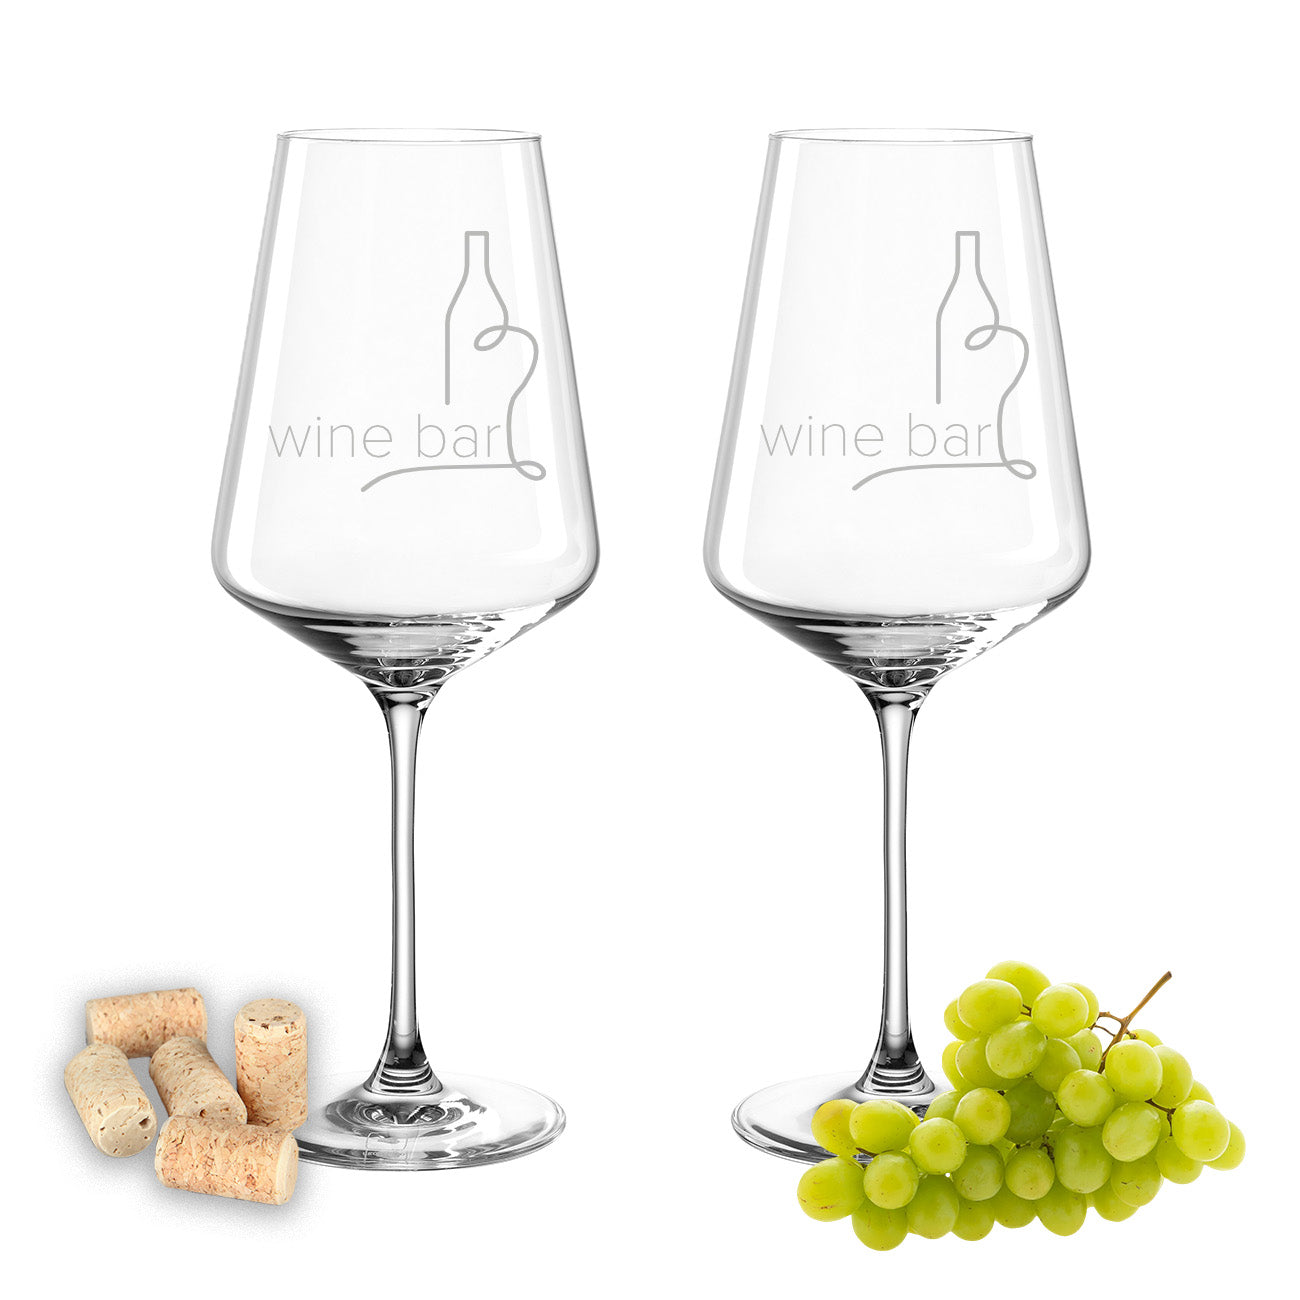 Weinglas mit Gravur Leonardo Puccini "WINE BAR" 2 Gläser